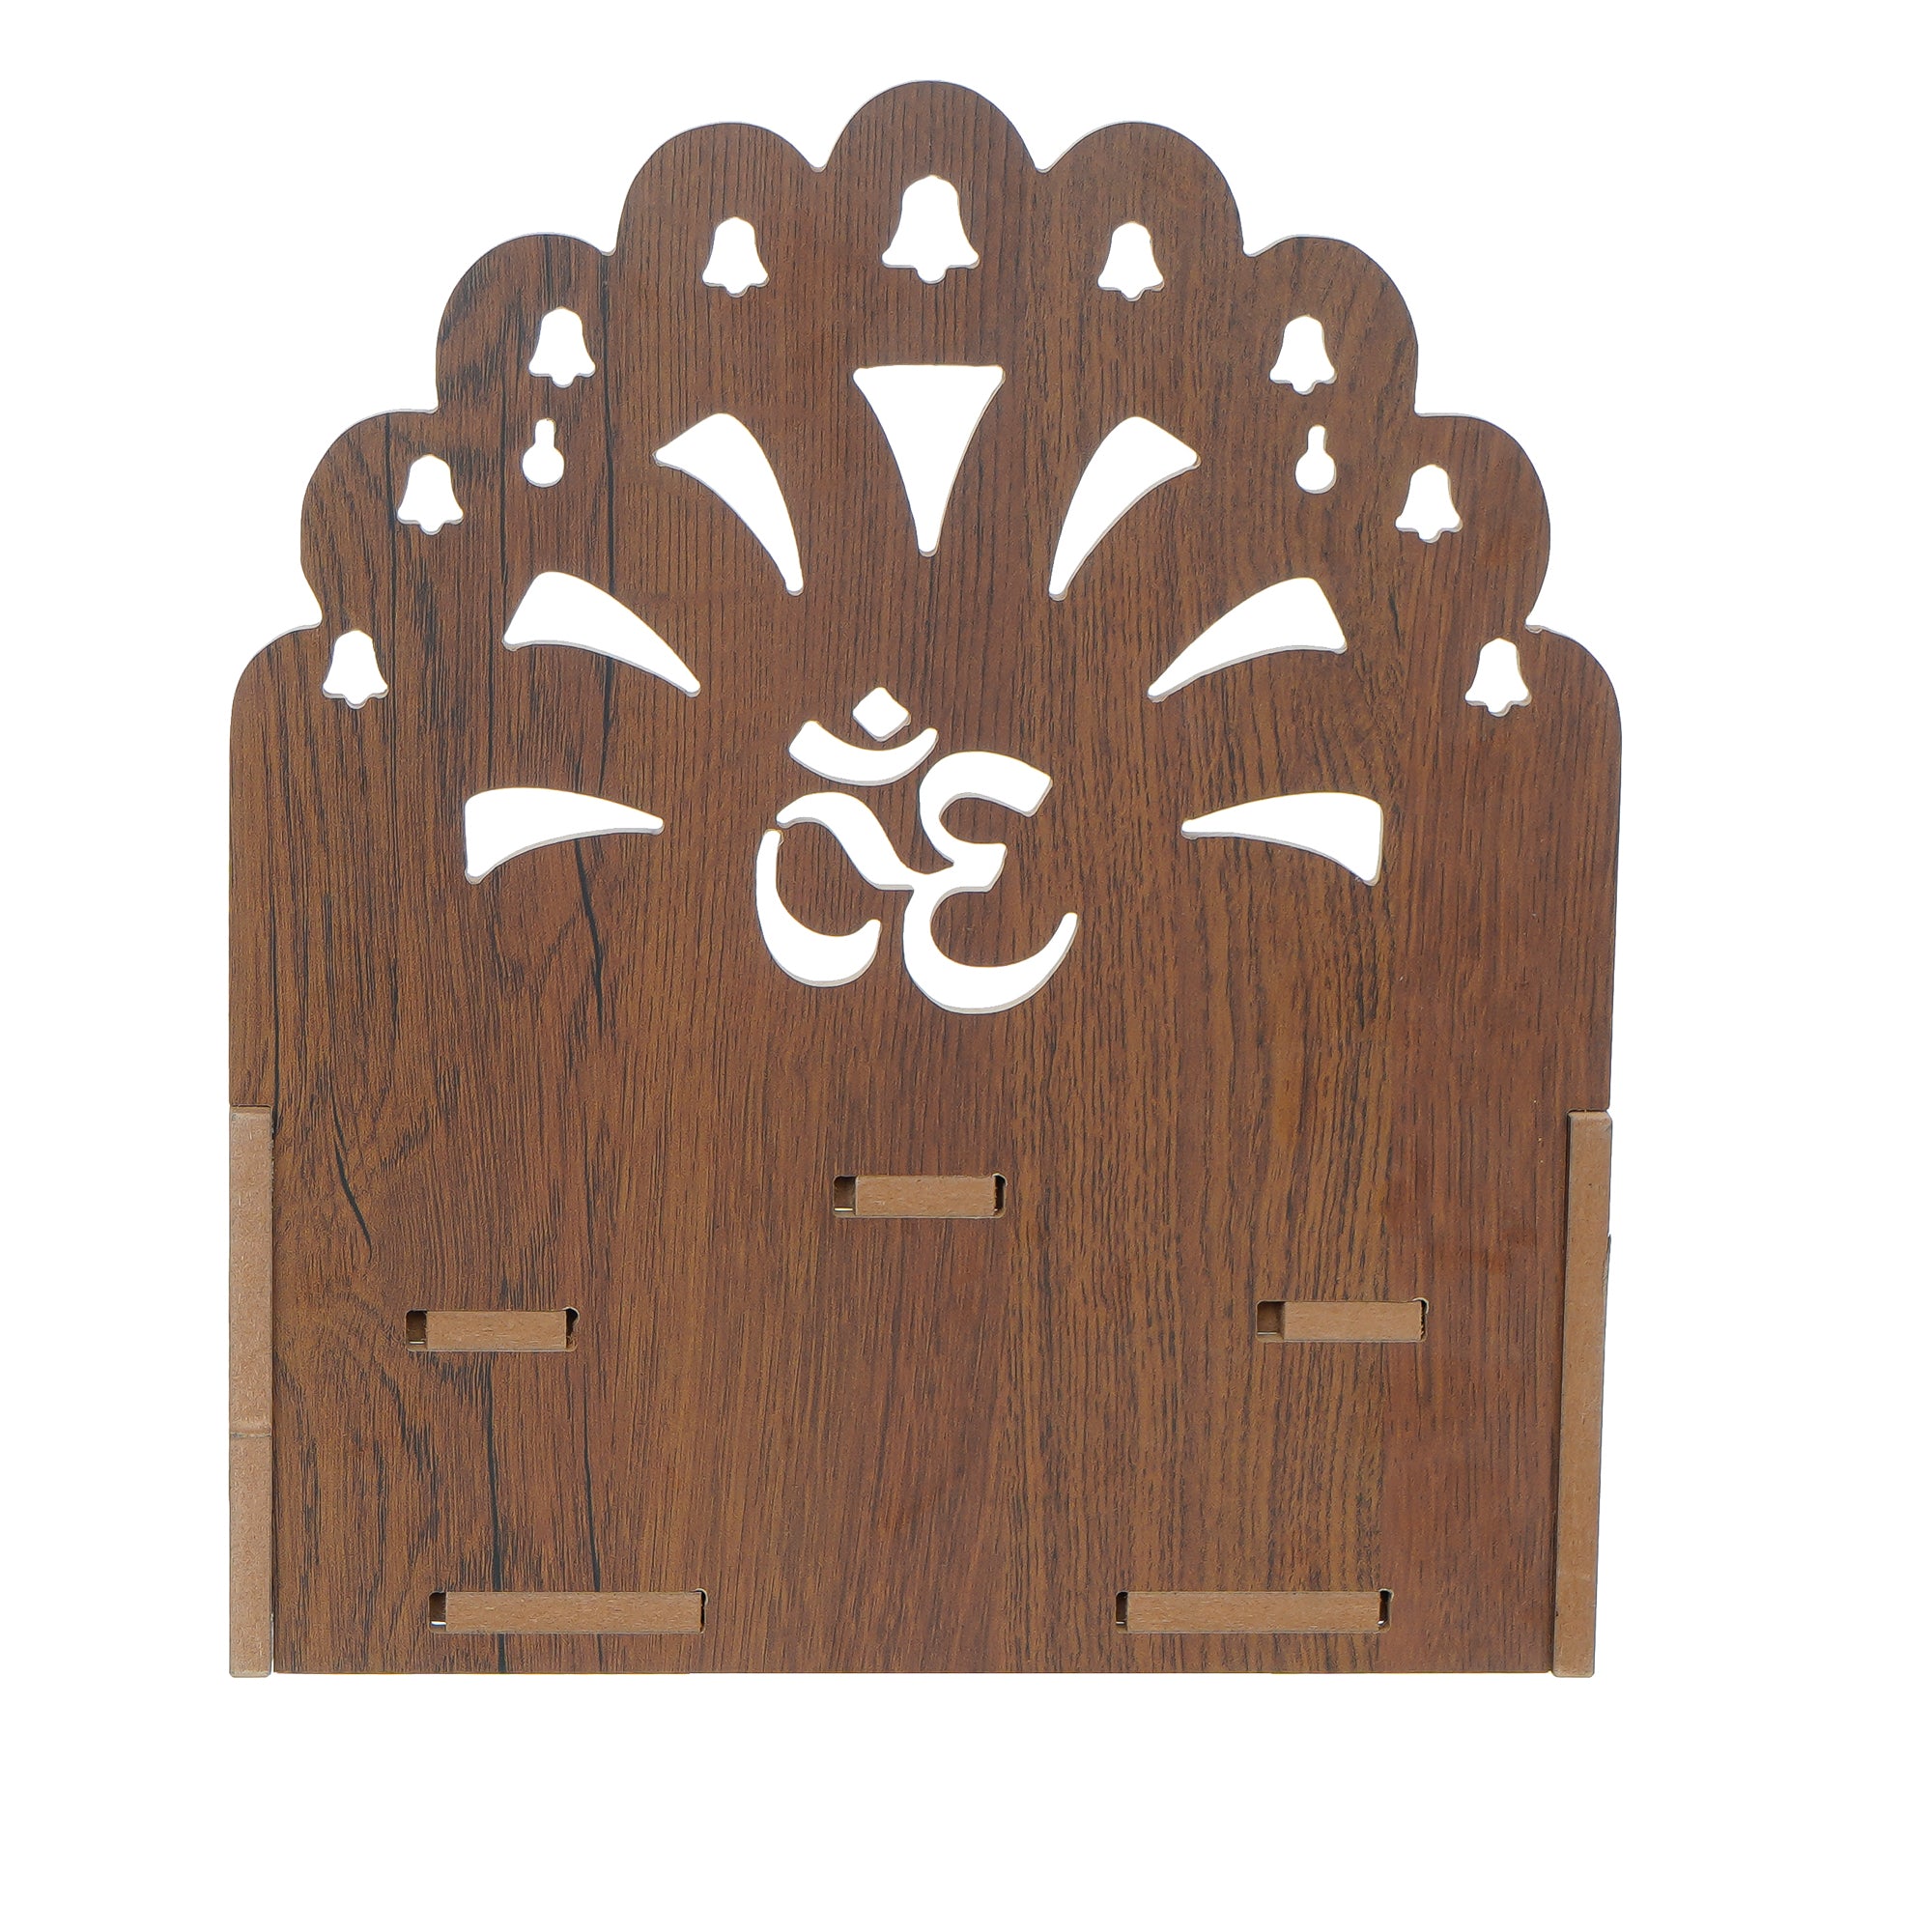 Om with Bells Design and 3 Shelfs Laminated Wood Pooja Temple/Mandir 6